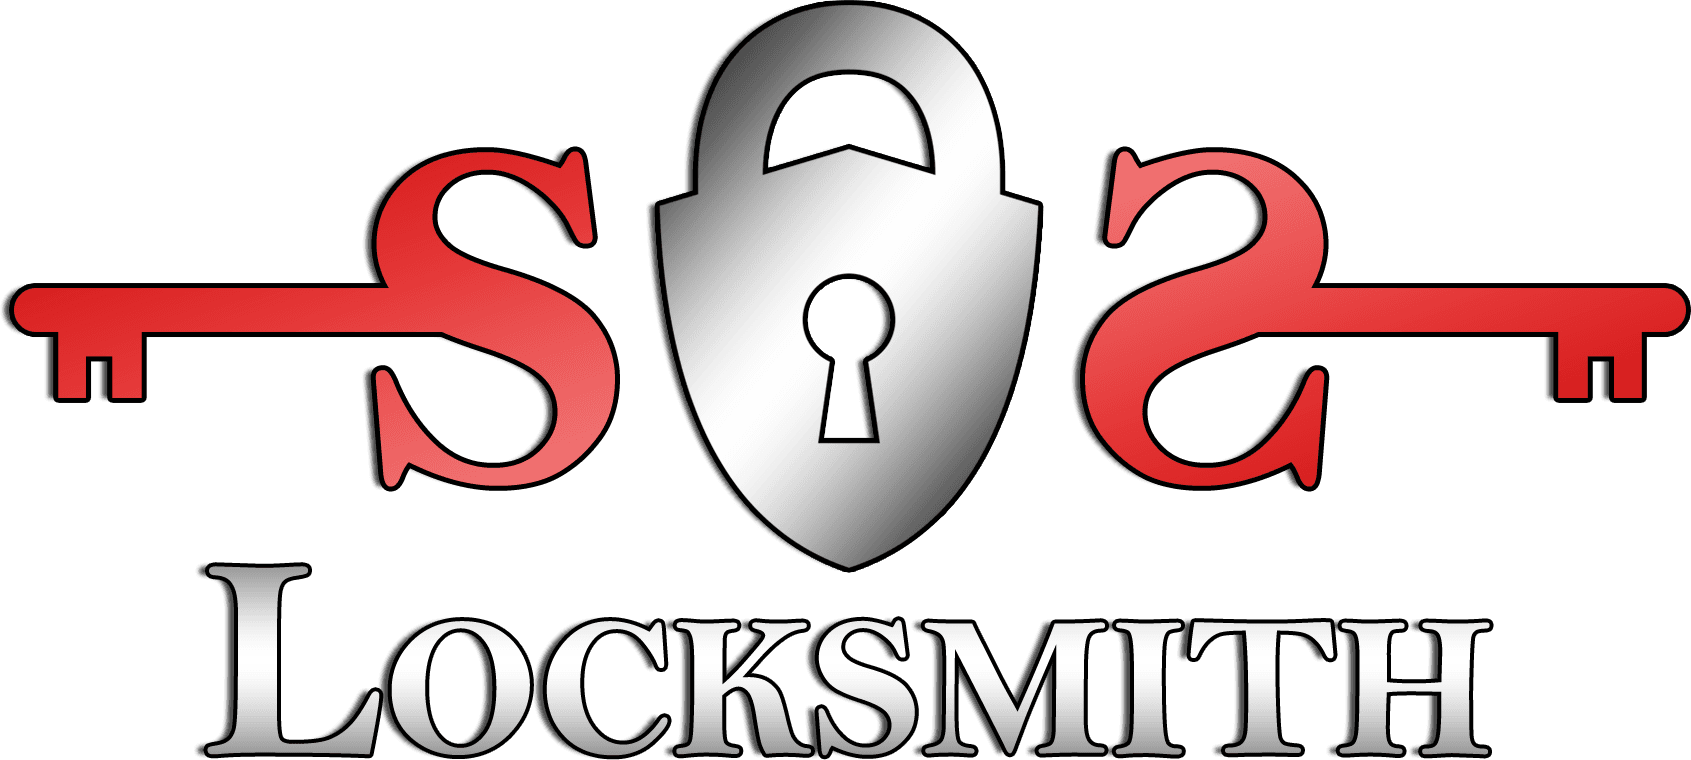 The Best Local Locksmith Service | 24 Hour Emergency Locksmith